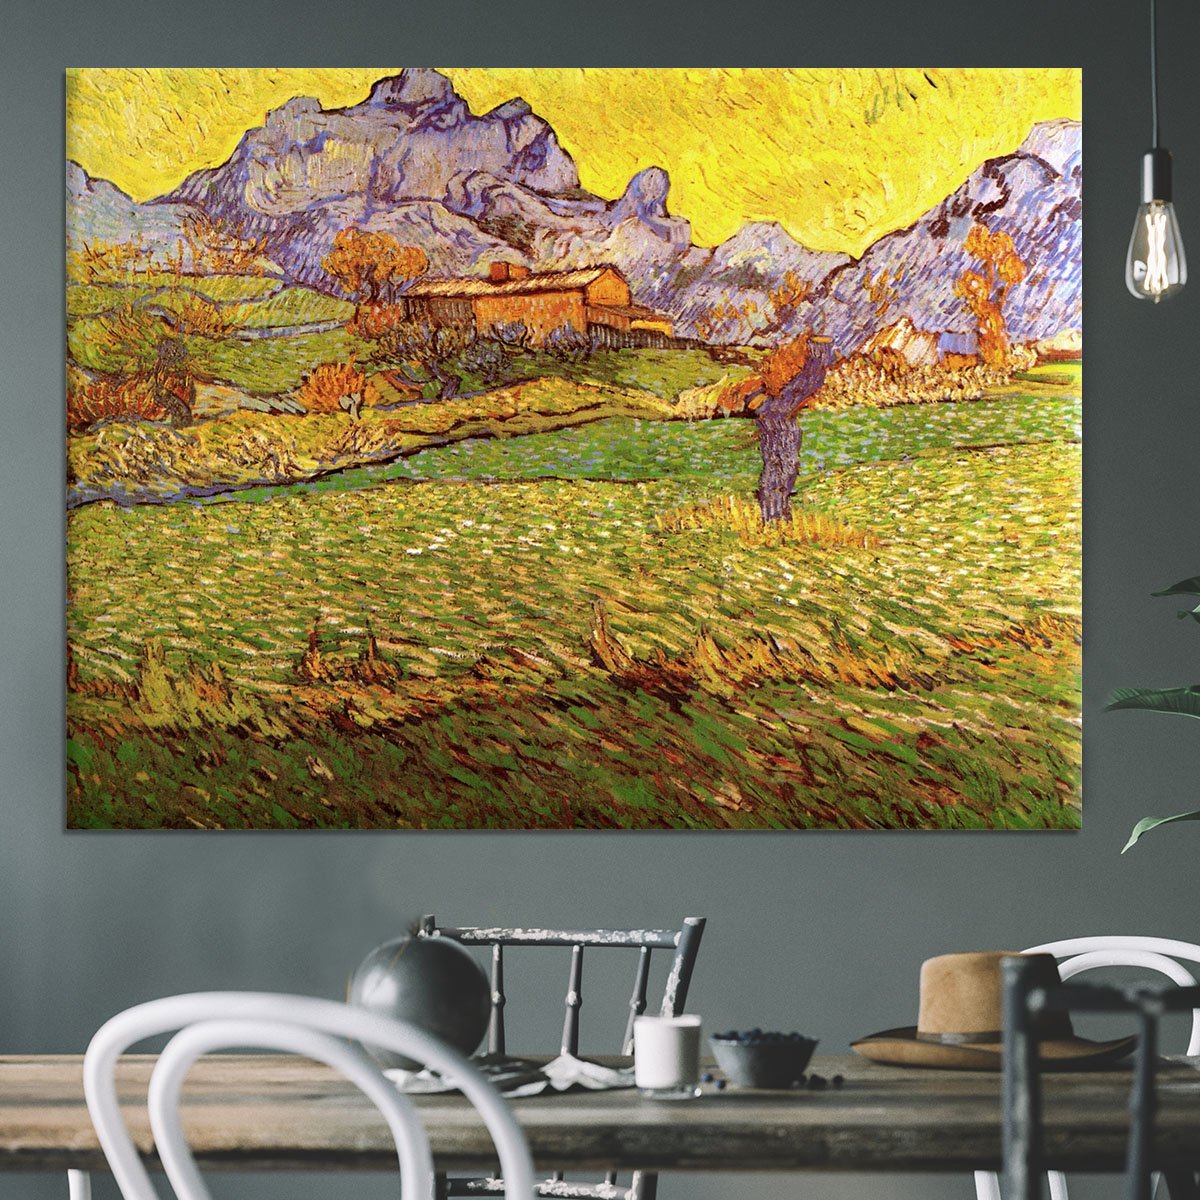 A Meadow in the Mountains Le Mas de Saint-Paul by Van Gogh Canvas Print or Poster